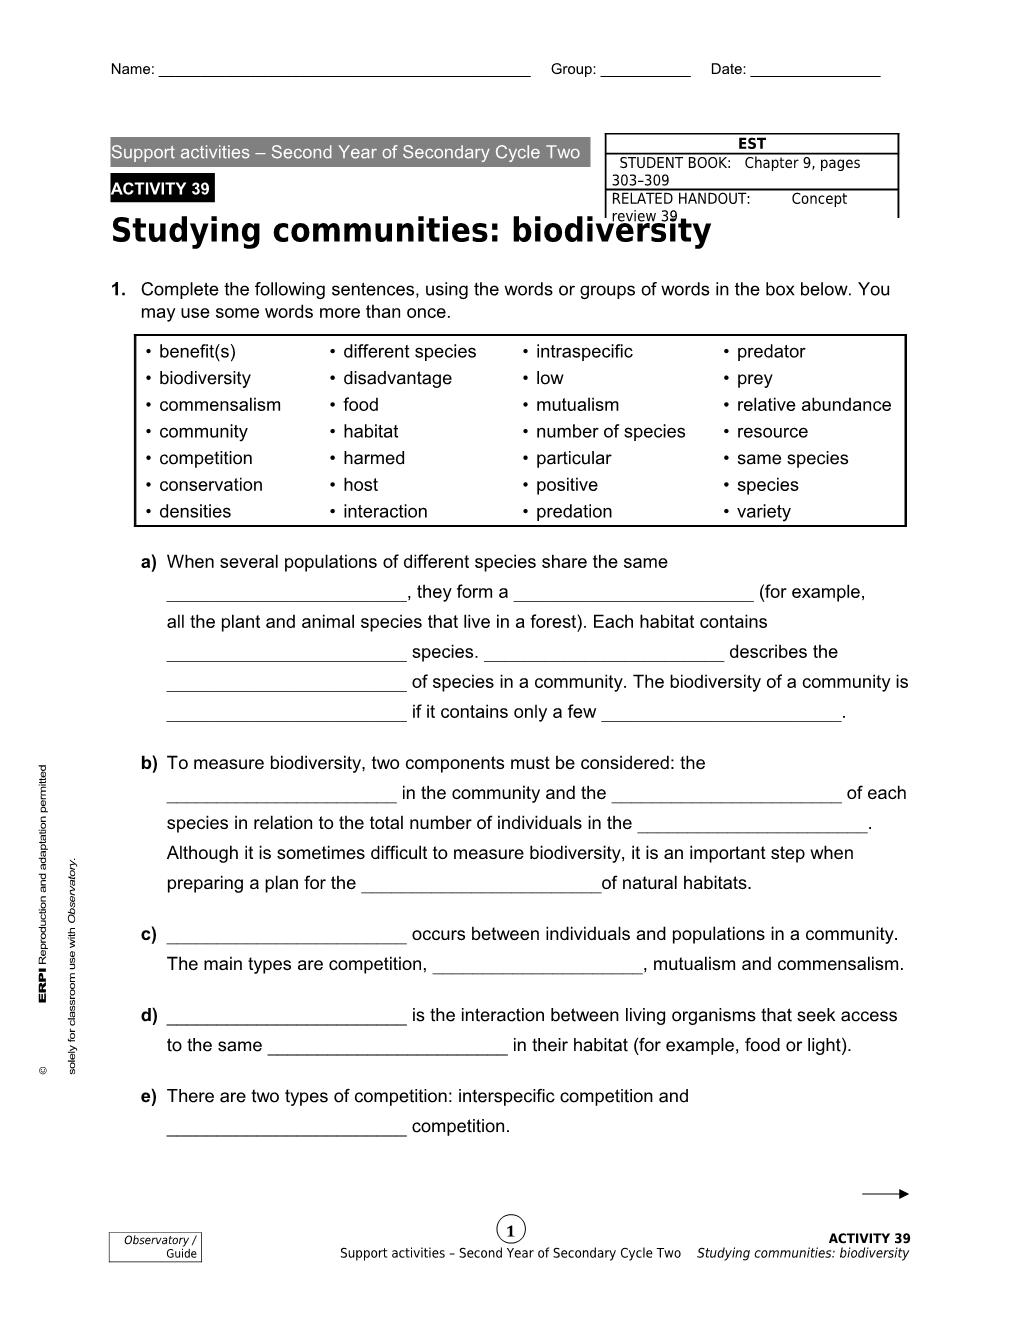 Studying Communities: Biodiversity